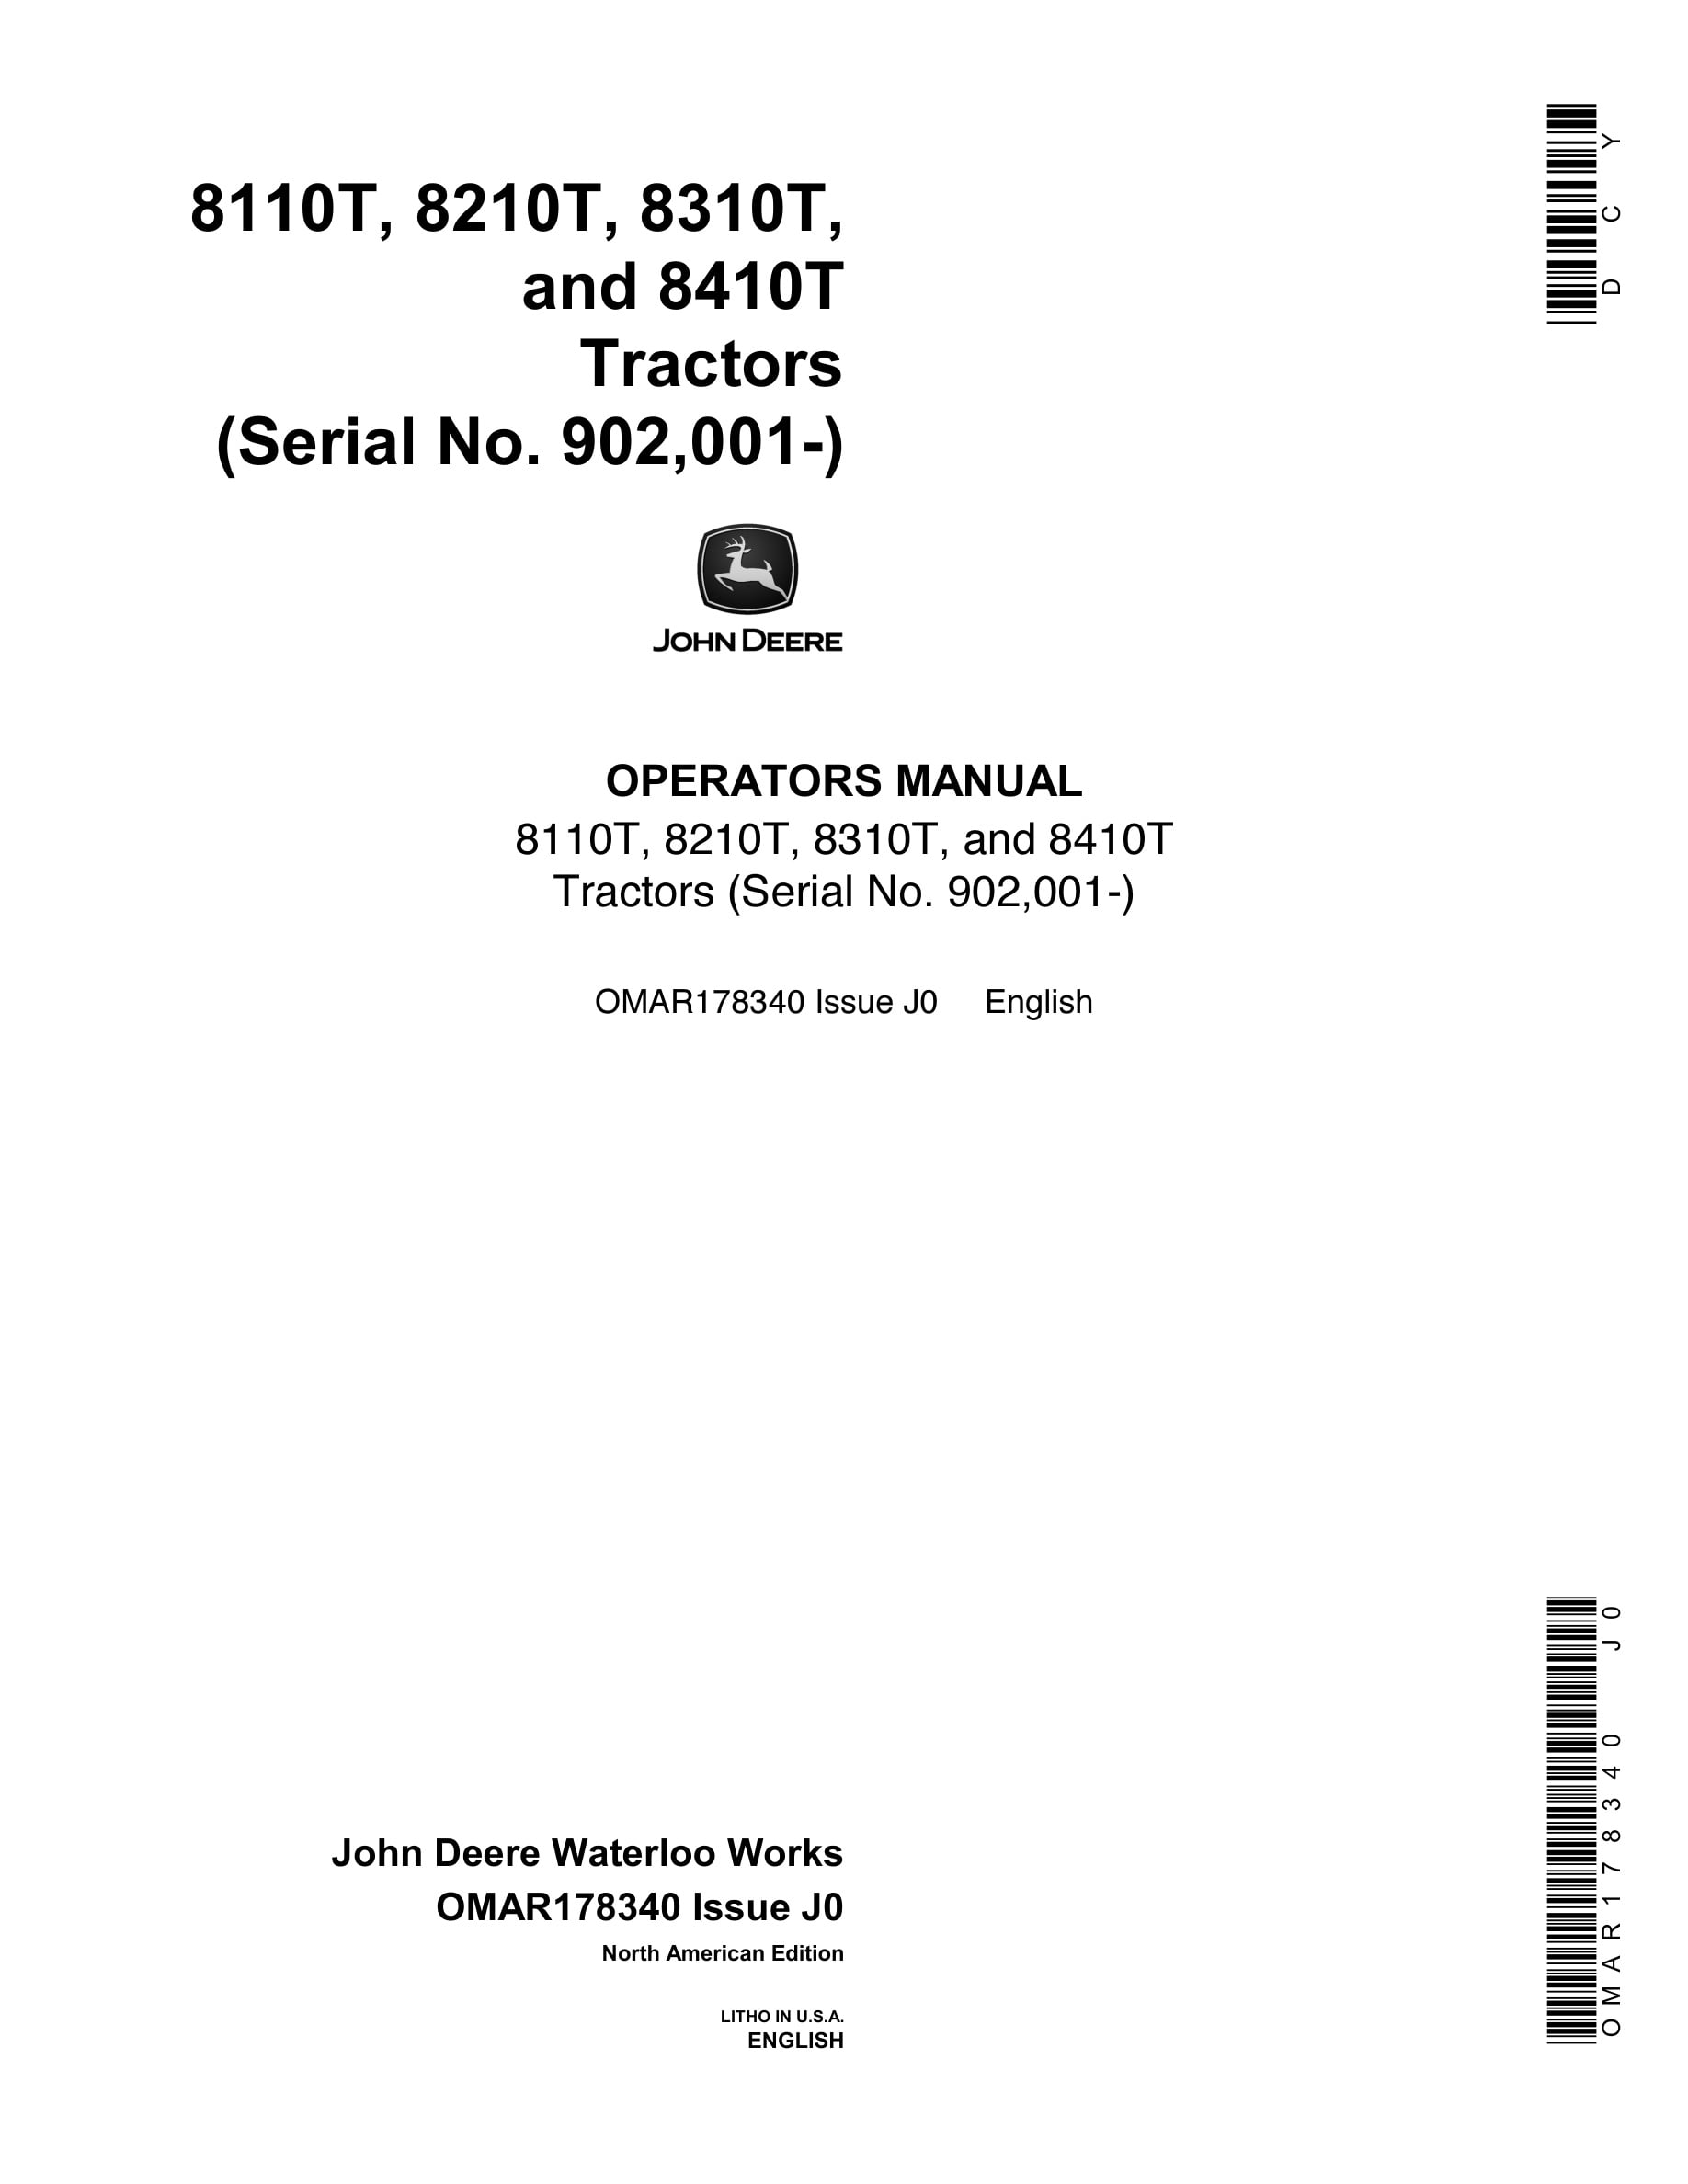 John Deere 8110T 8210T 8310T 8410T Tractor Operator Manual OMAR178340-1